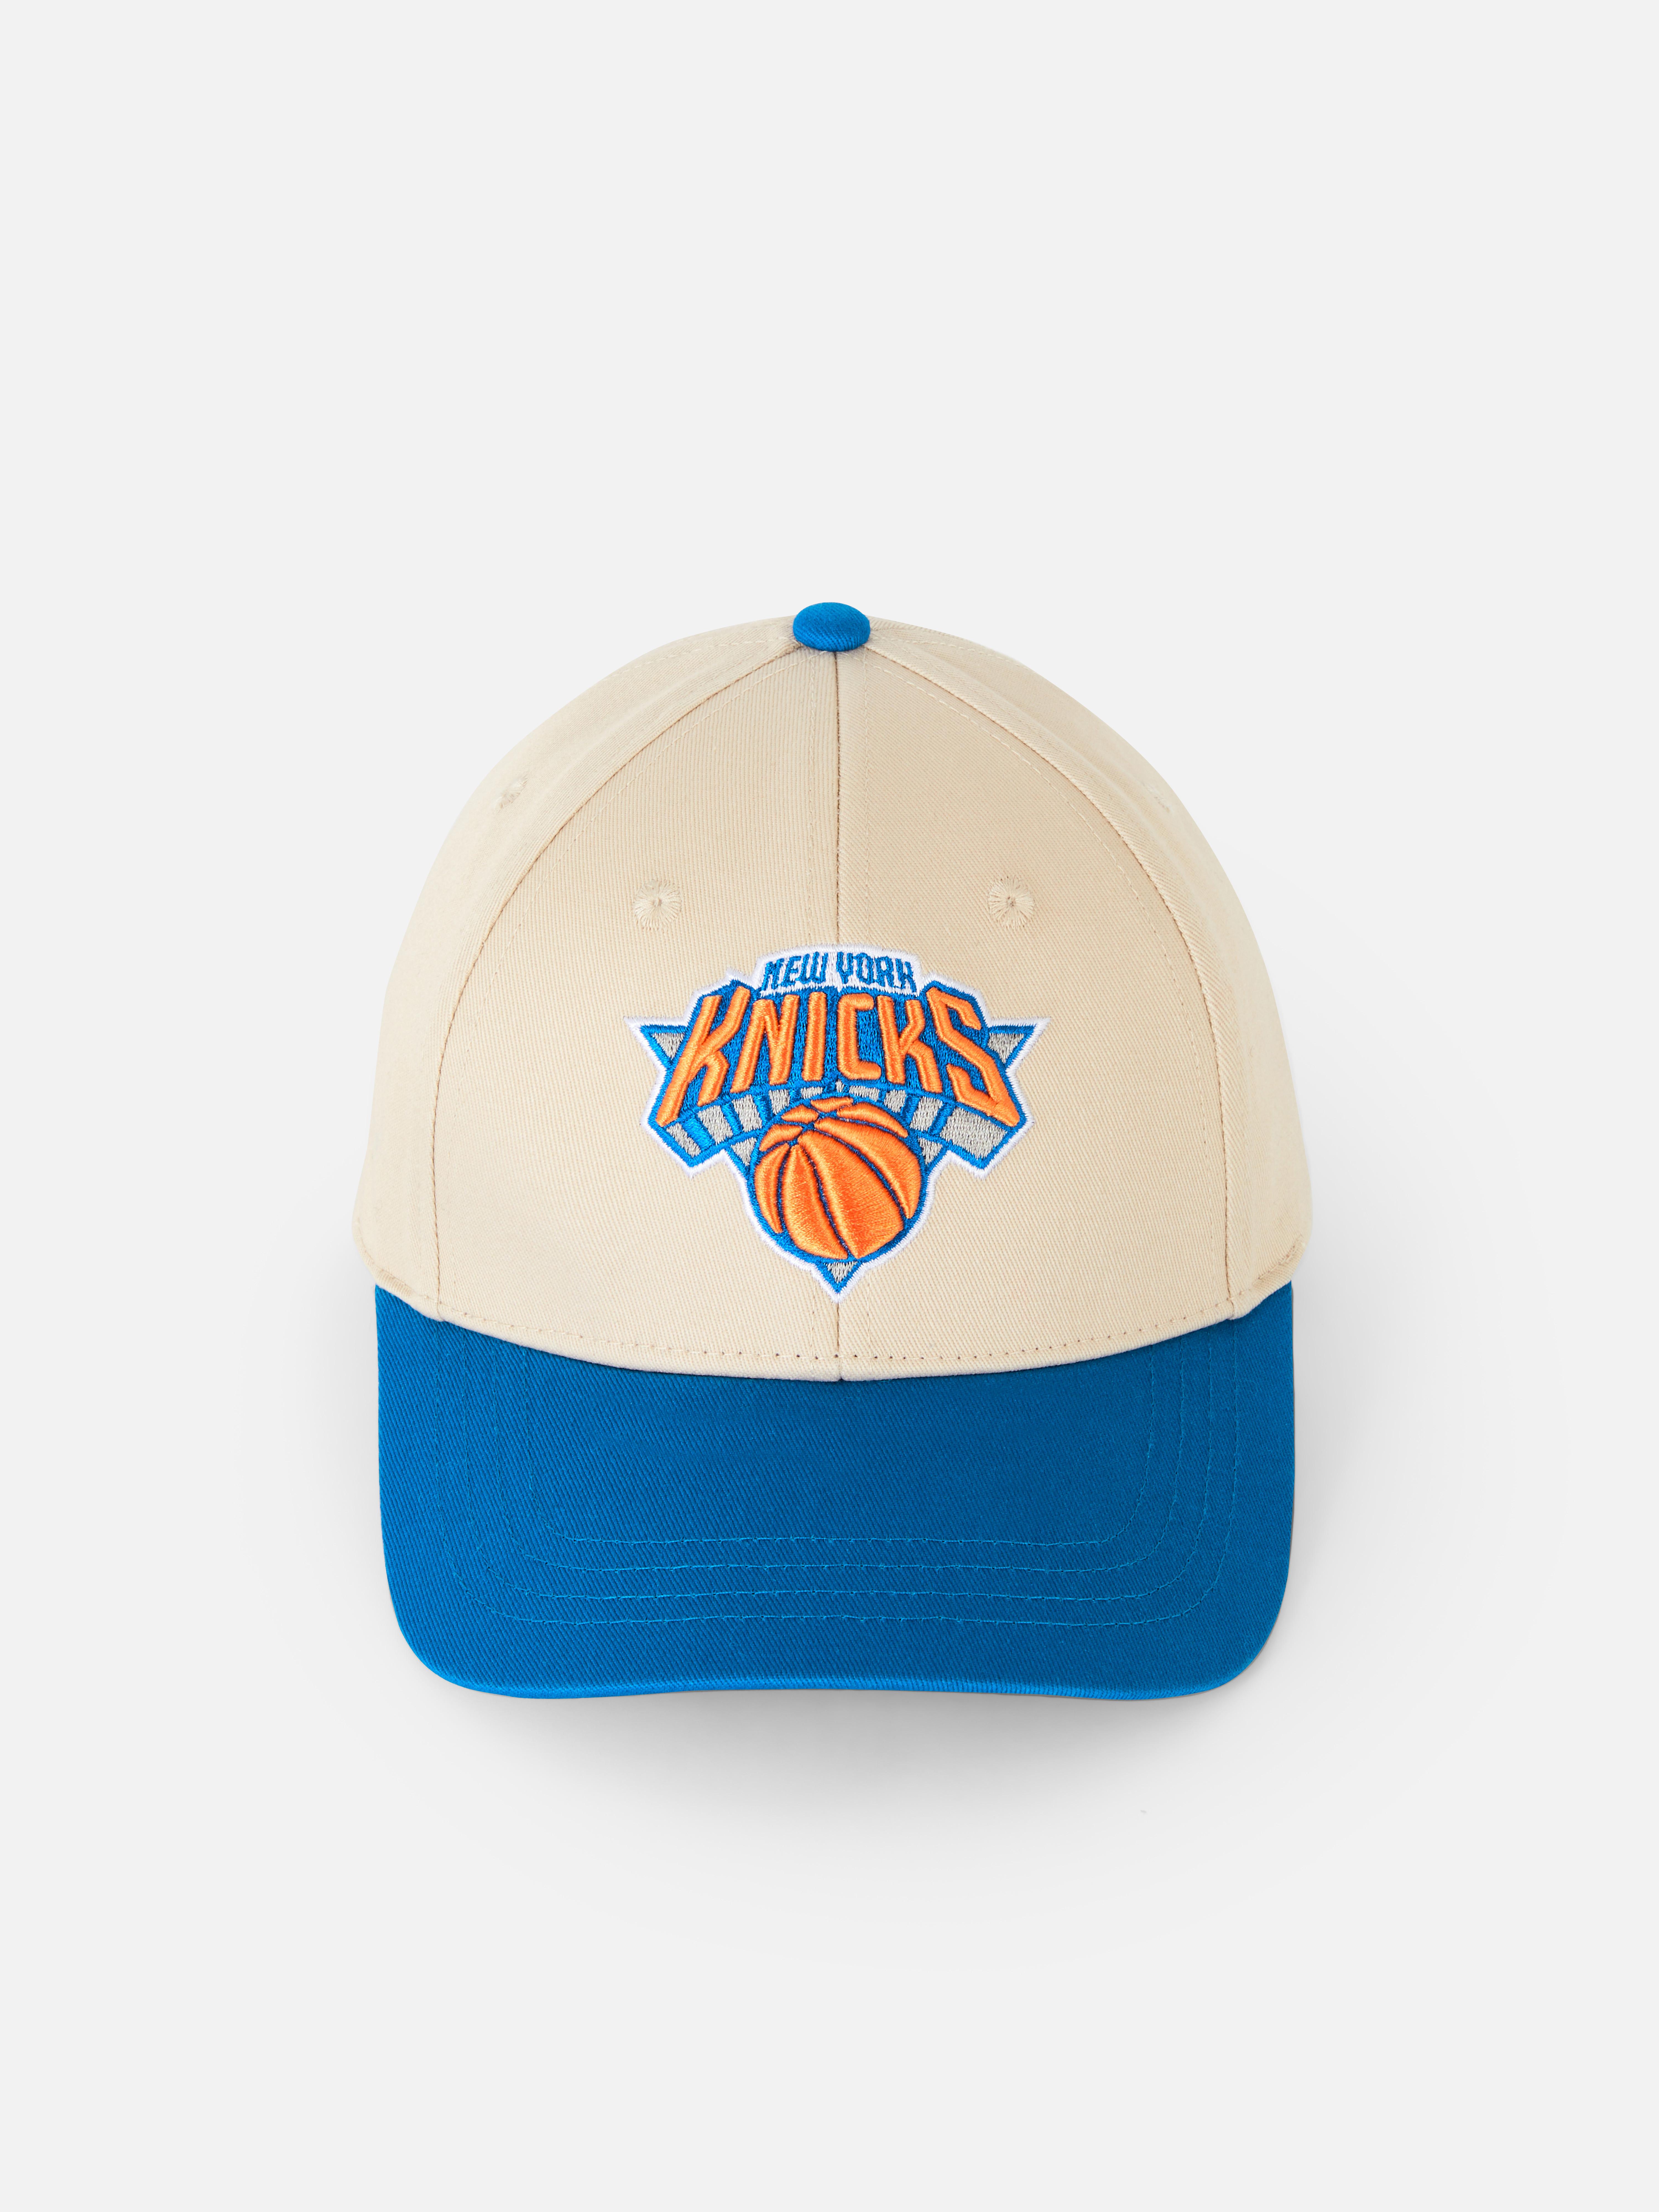 NBA New York Knicks Youth Cap